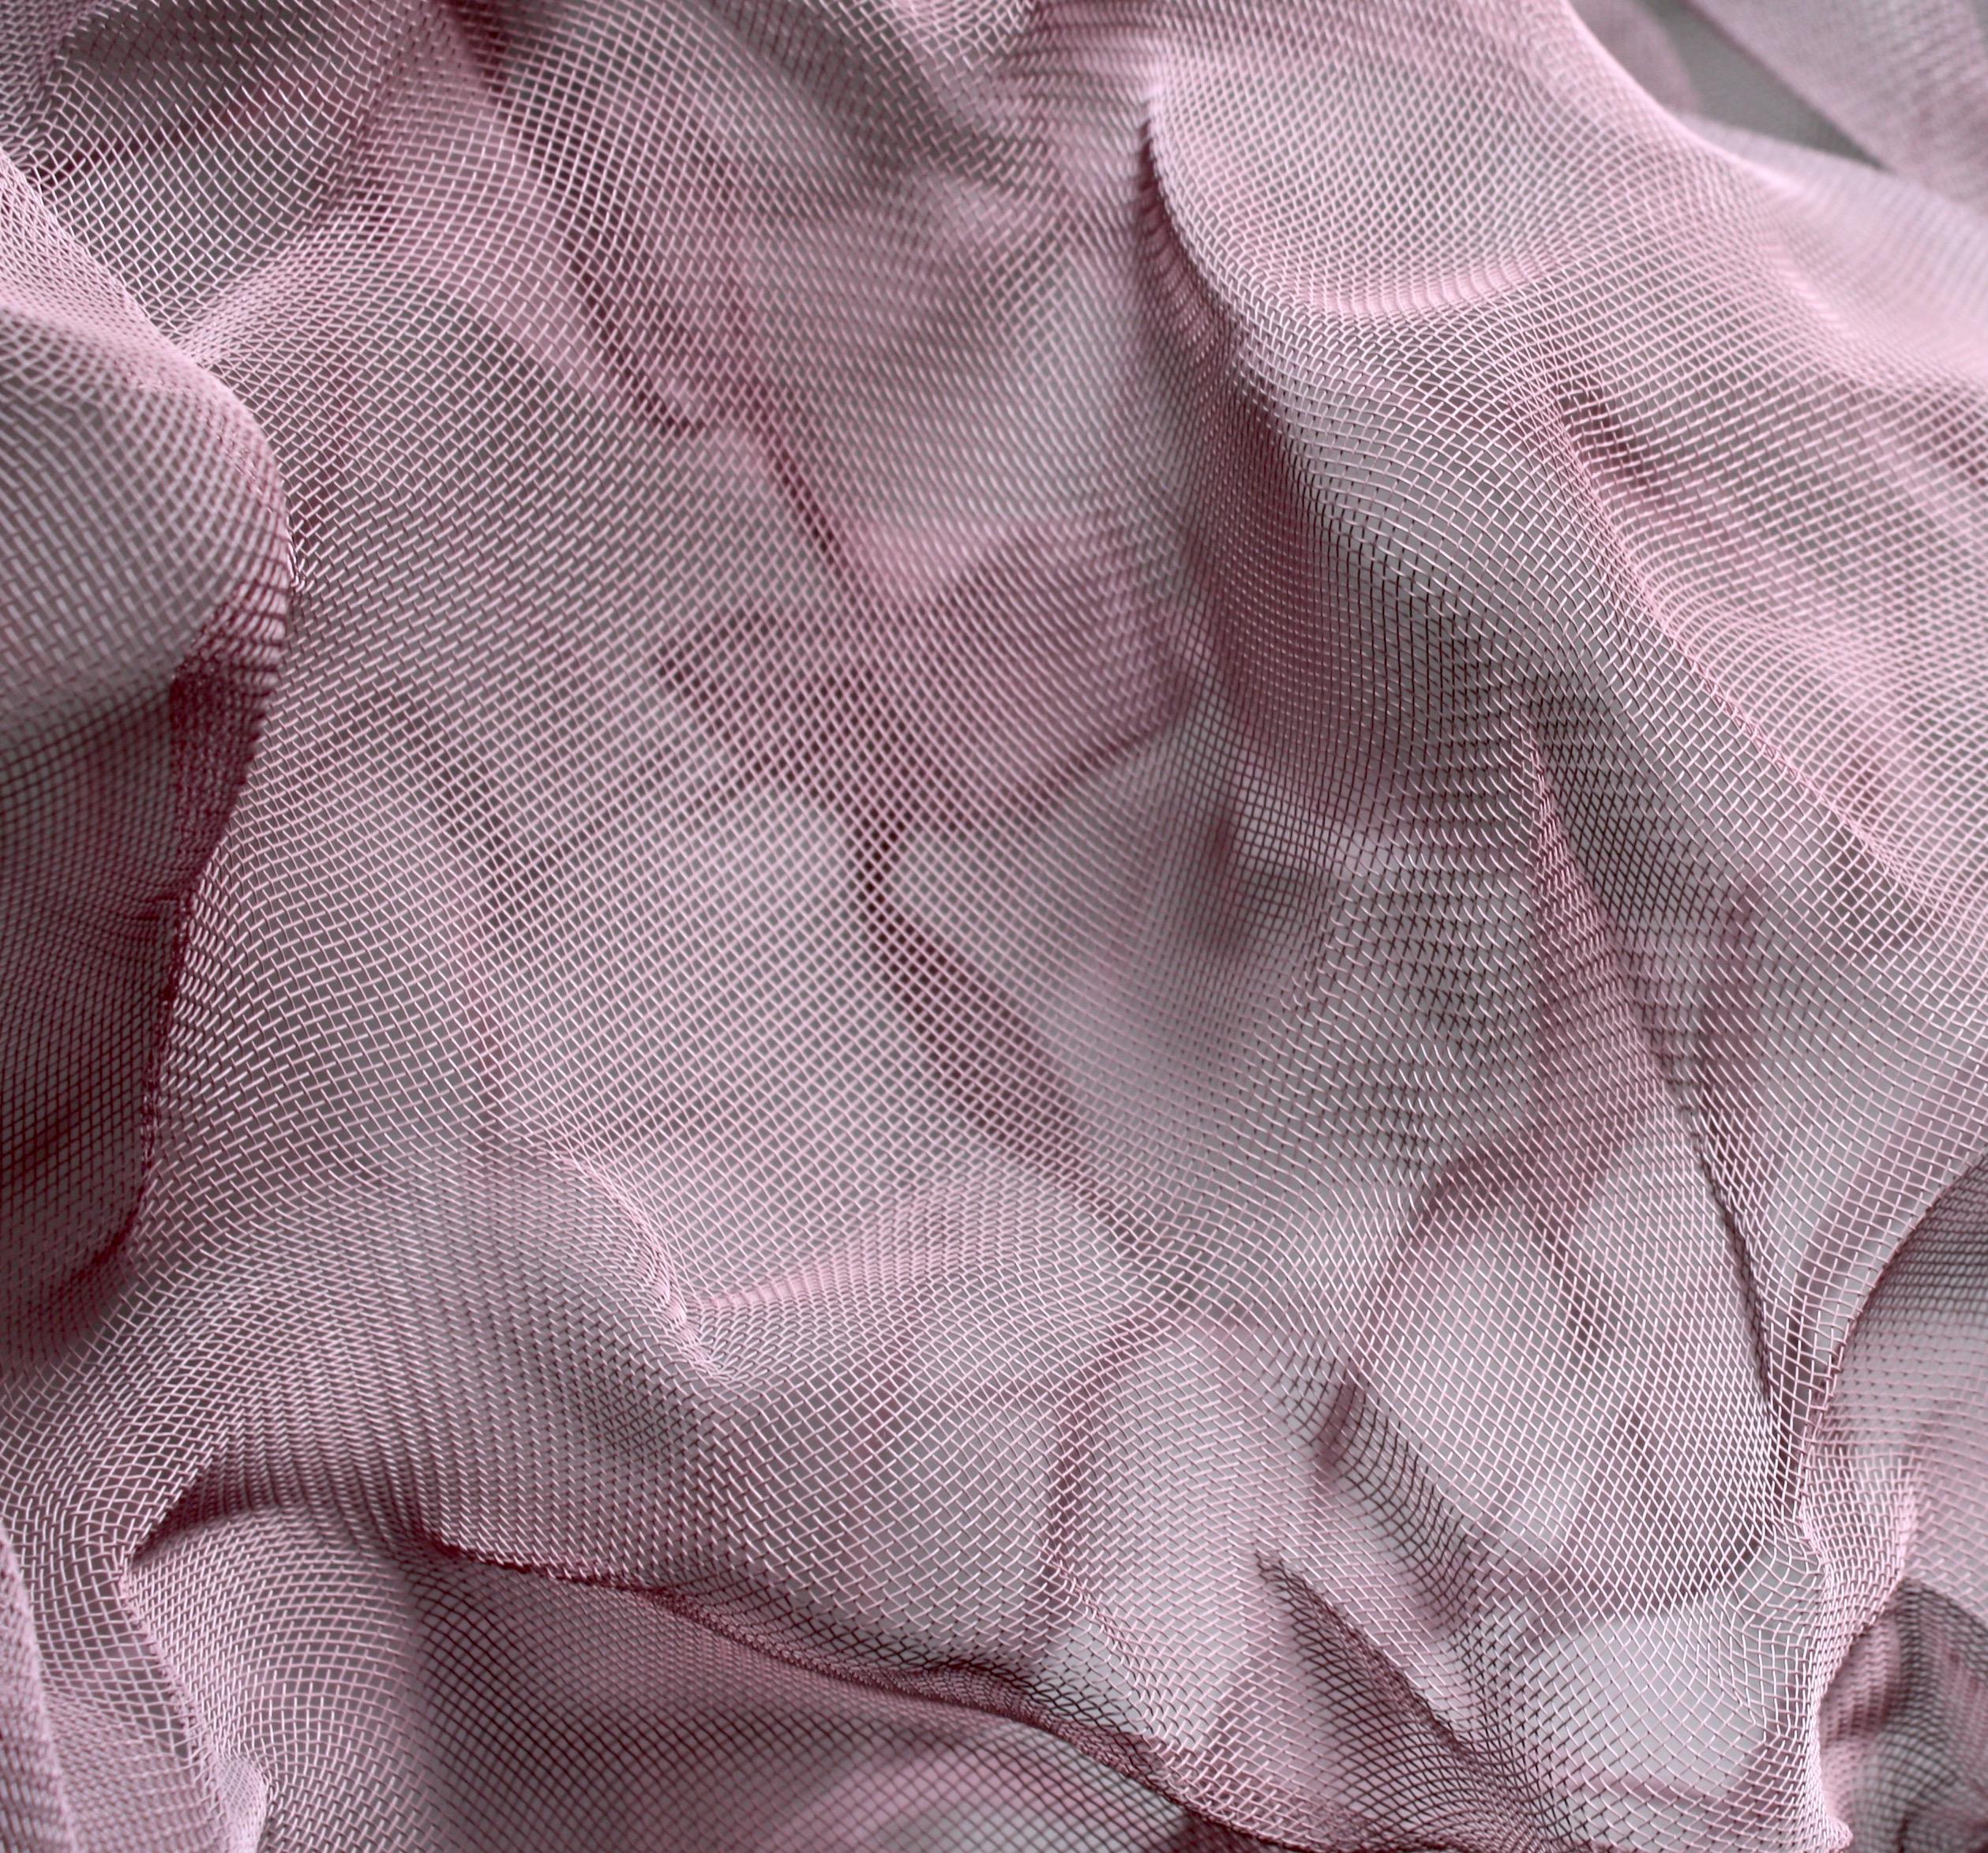 Cotton Candy Cumulus, Atticus Adams Pink Metal Mesh Sculpture Screen 5